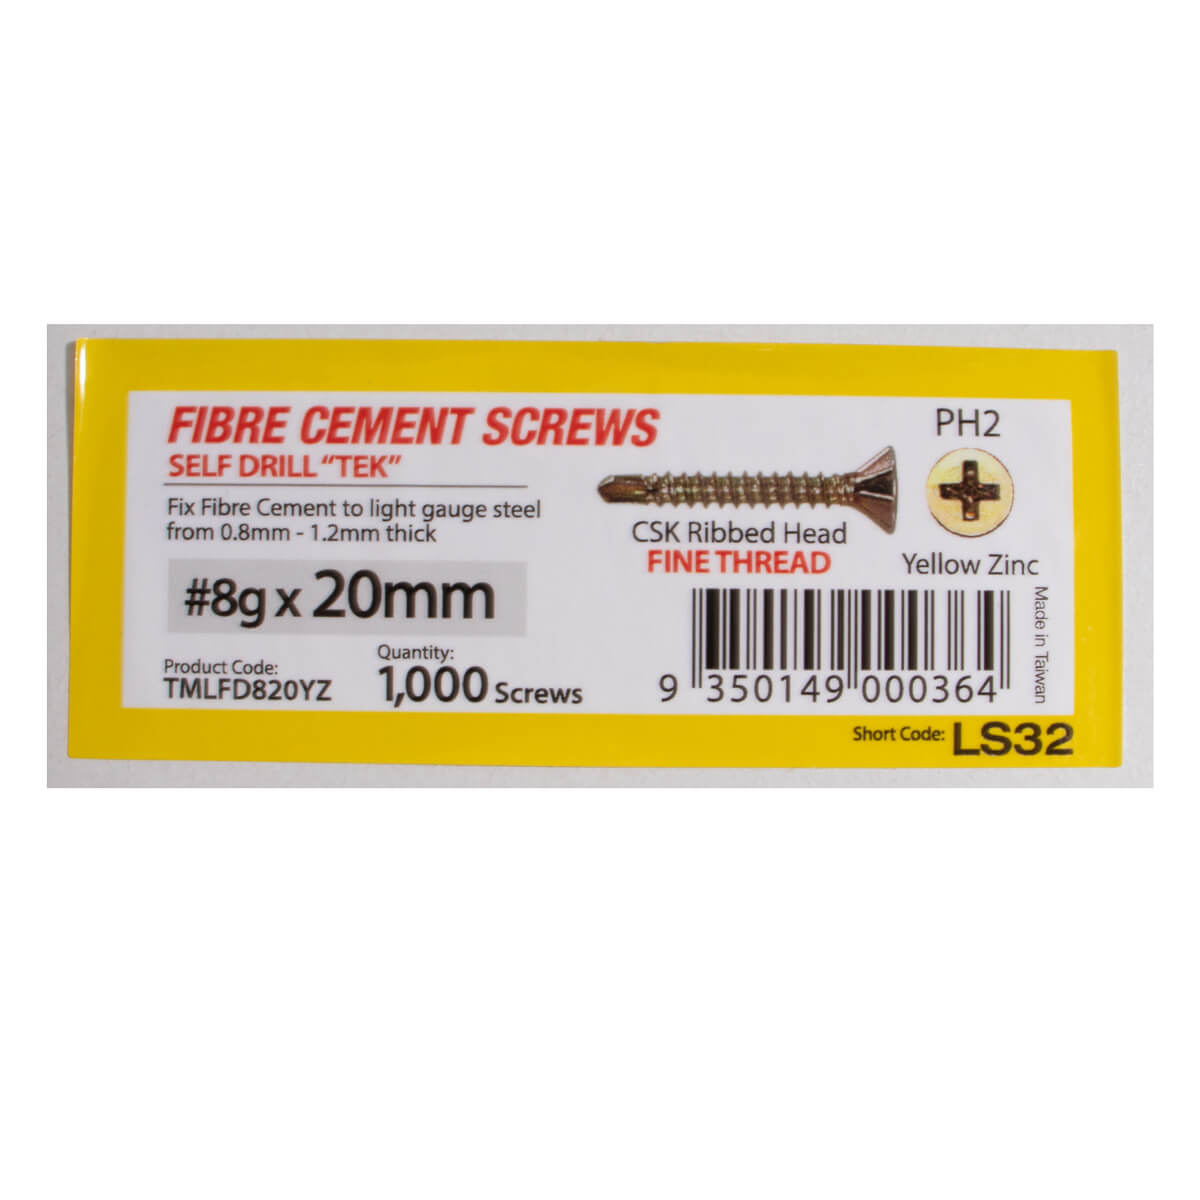 Screws 20mmx8g Loose Self Drill Fine CSK 1000 (TMLFD820YZ)